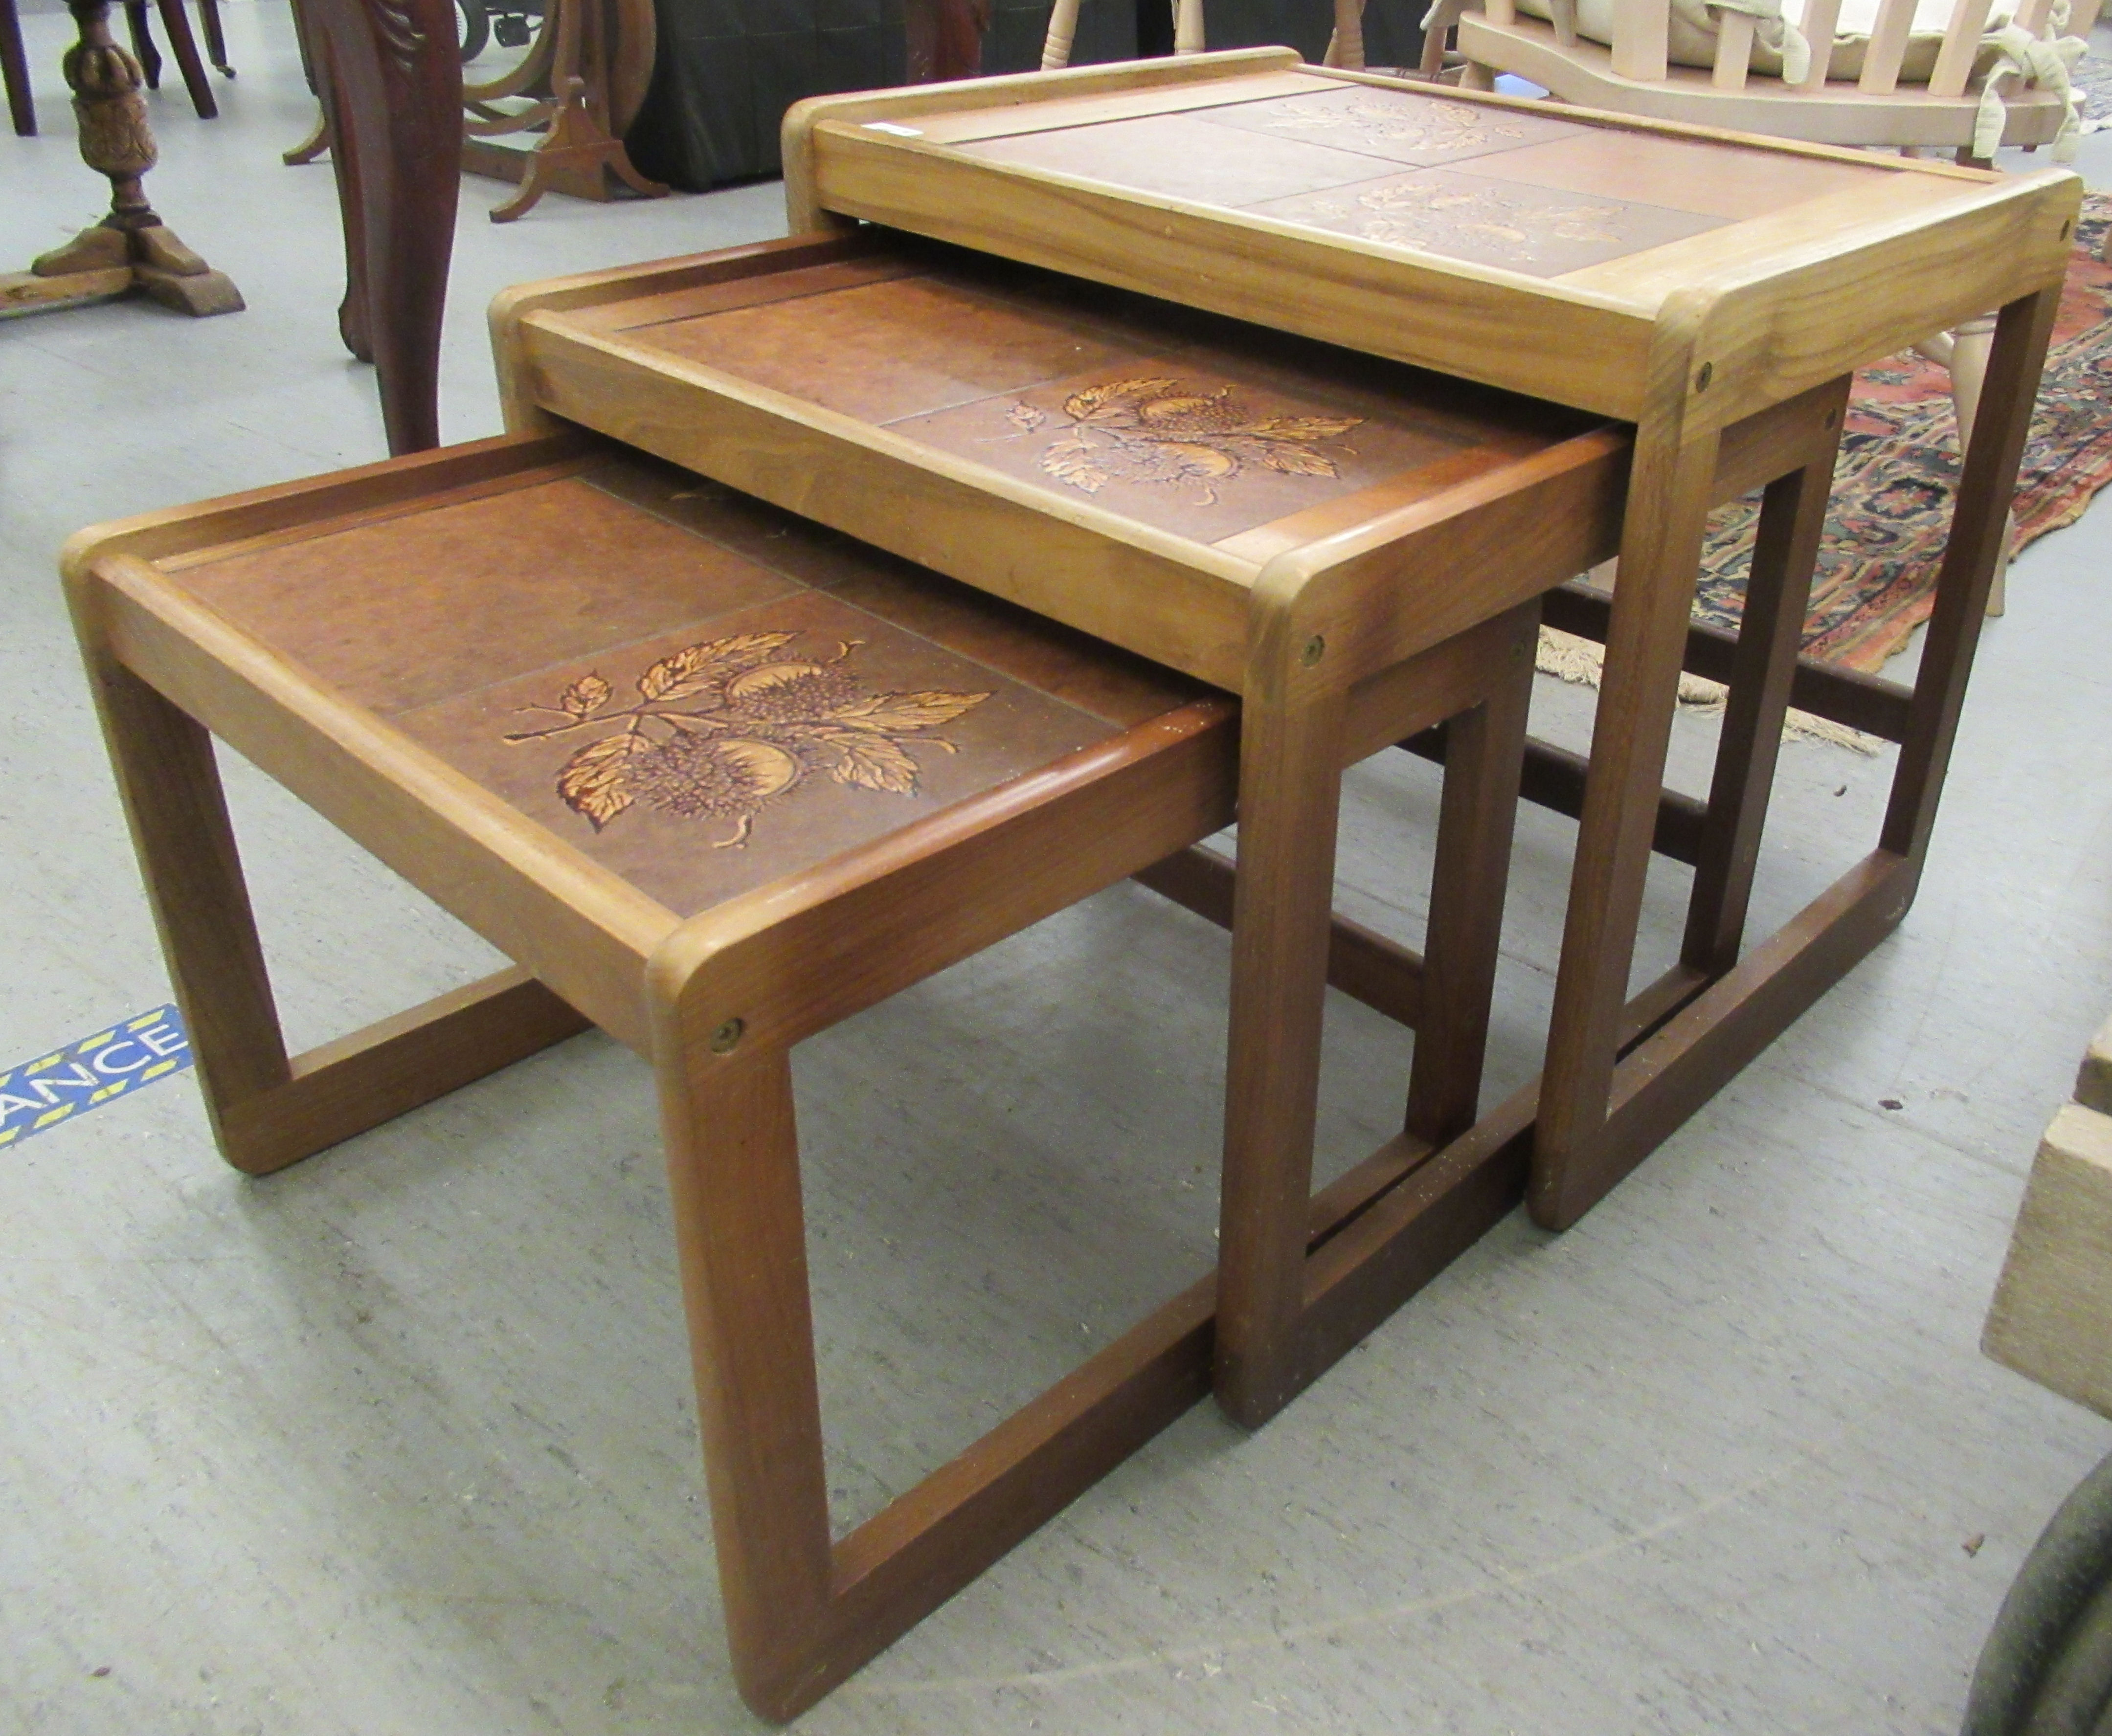 A nesting set of three modern teak framed tile top occasional tables, raised on block legs - Image 2 of 3